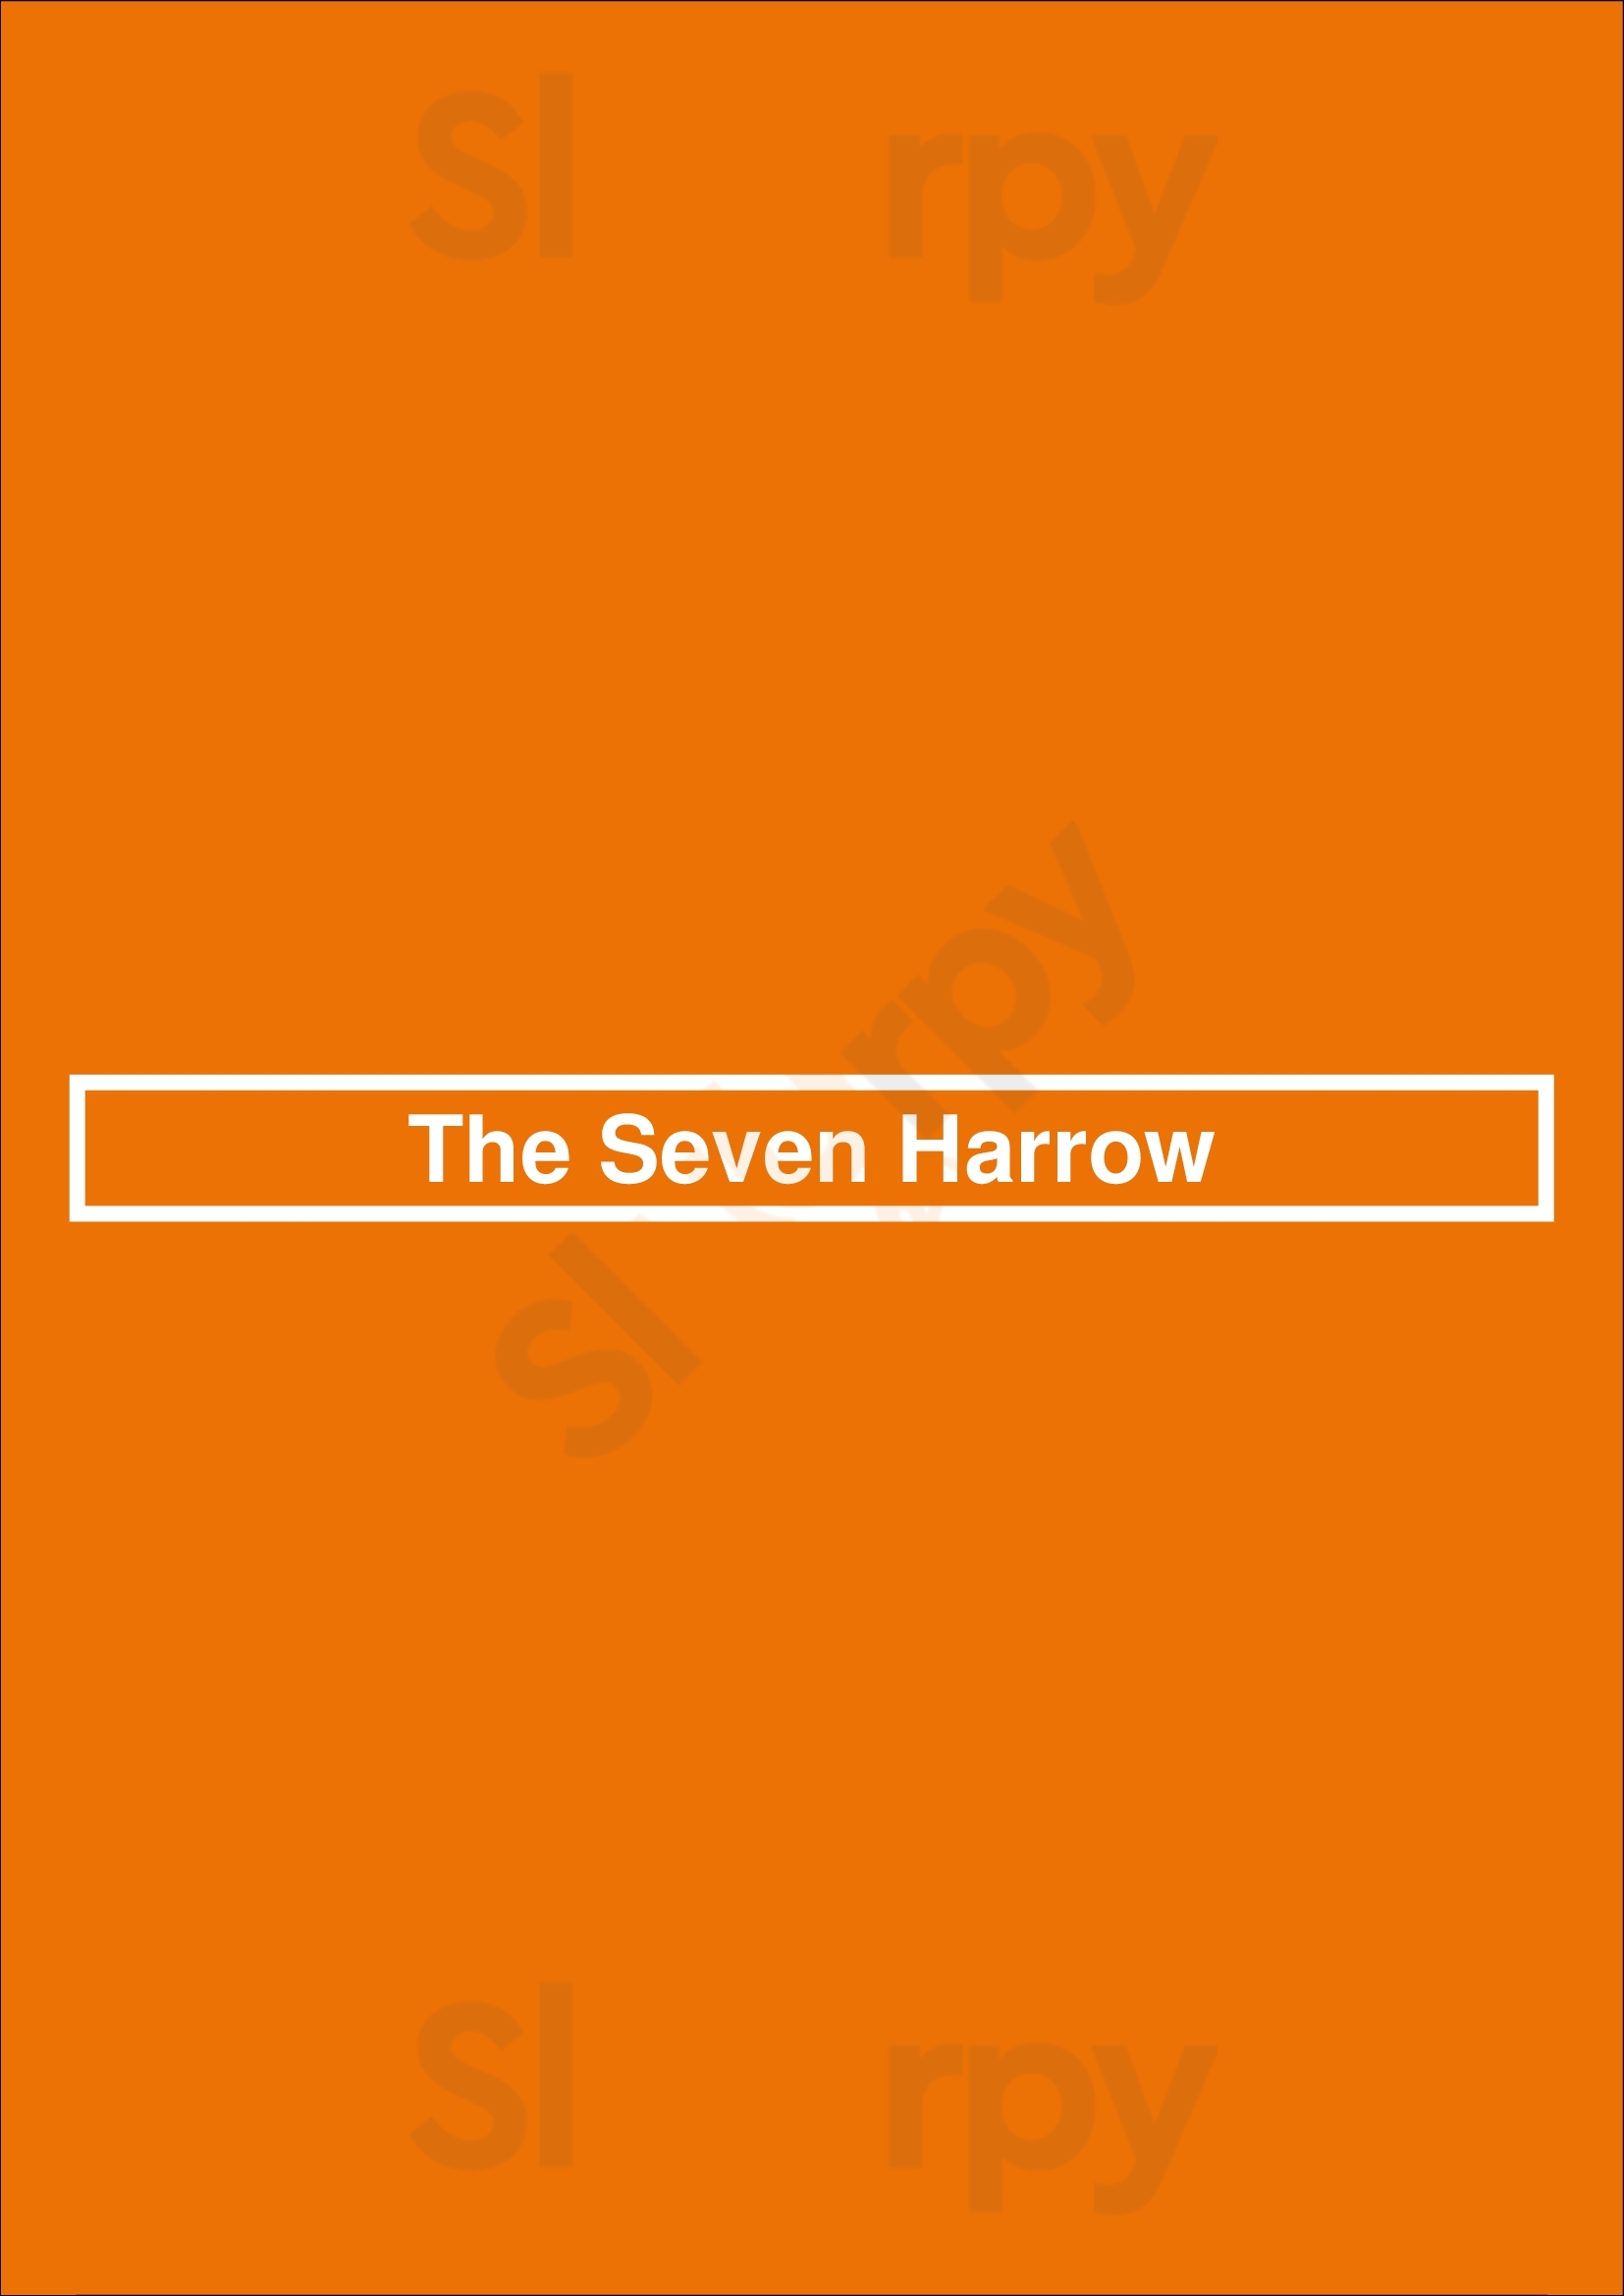 The Seven Harrow Menu - 1